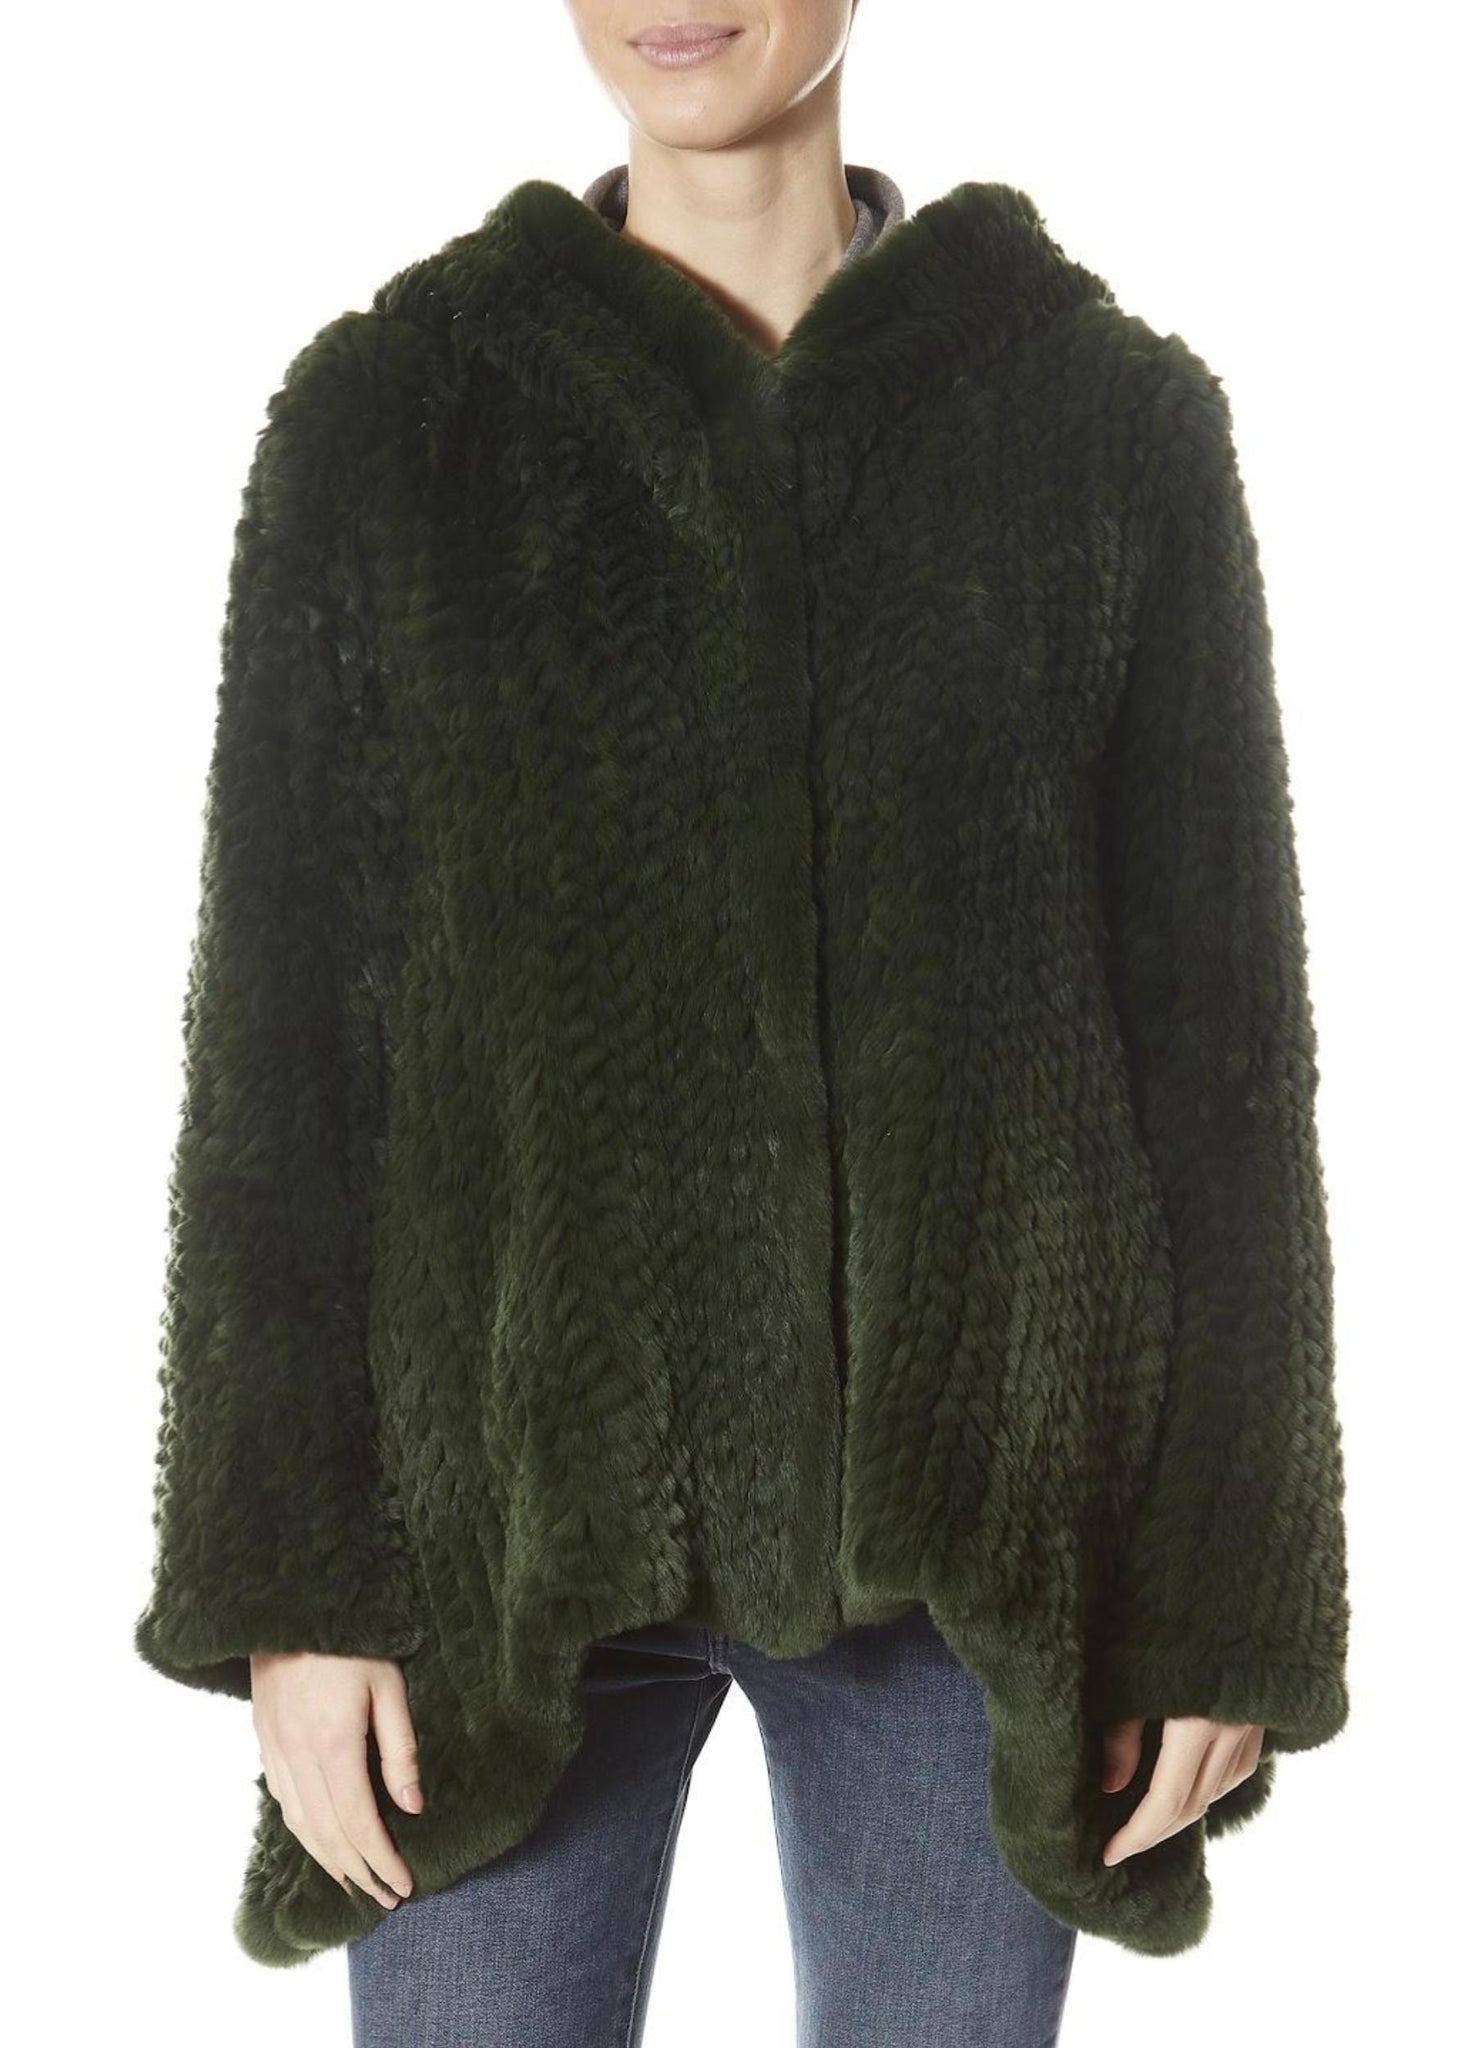 Green Asymmetric Knitted Rex Rabbit Jacket With Hood - Jessimara